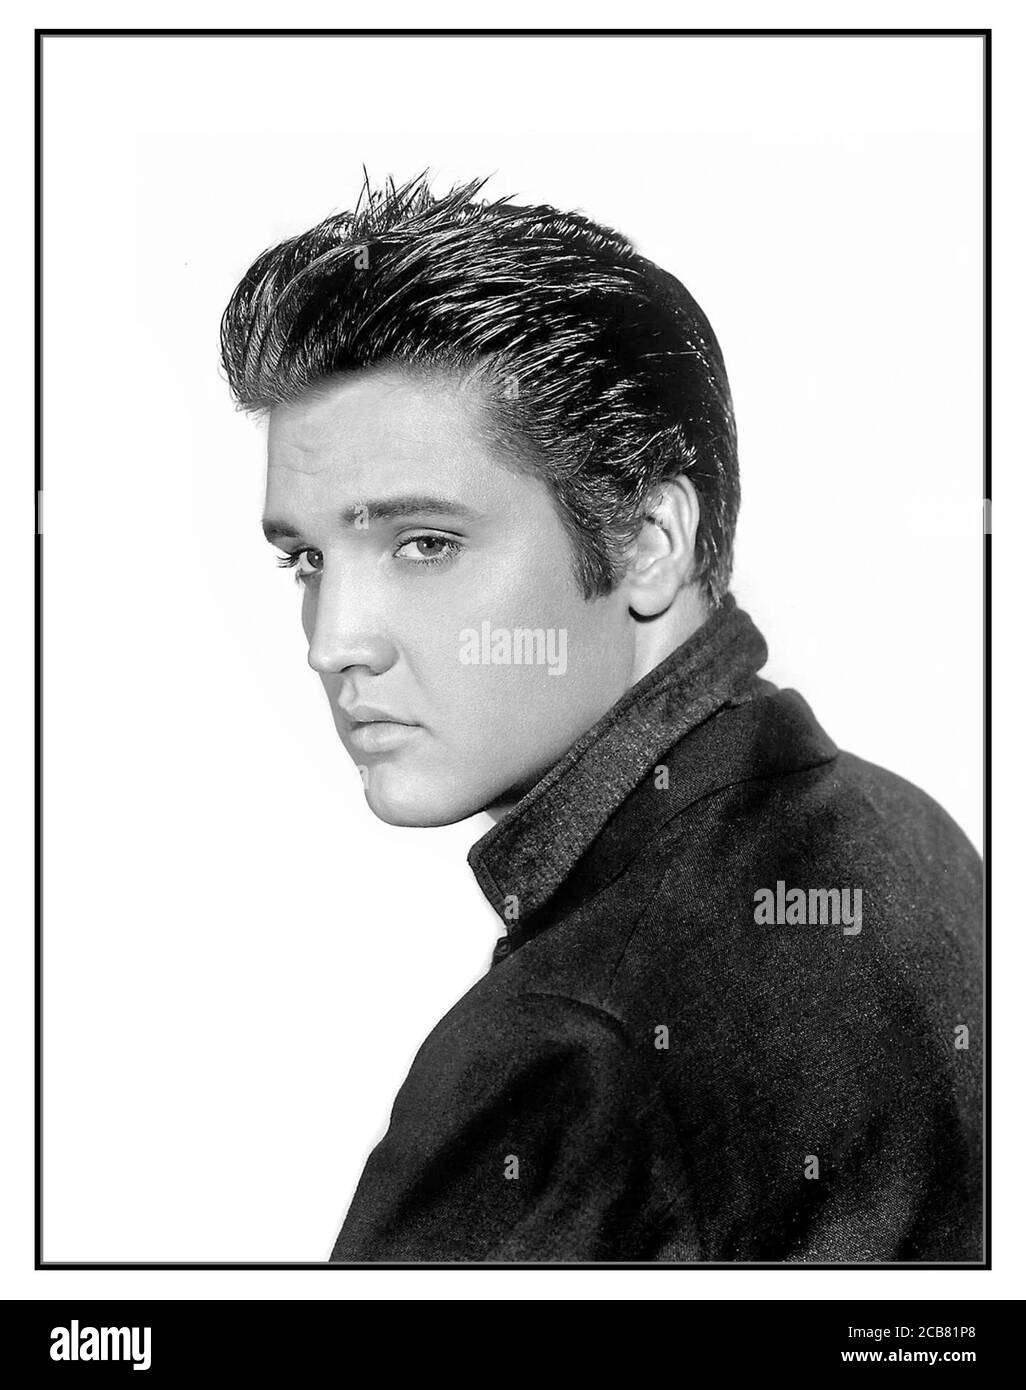 ELVIS PRESLEY '50's Vintage 1950's Hollywood film studio press promotional portrait still of Elvis Presley 'The King' Stock Photo